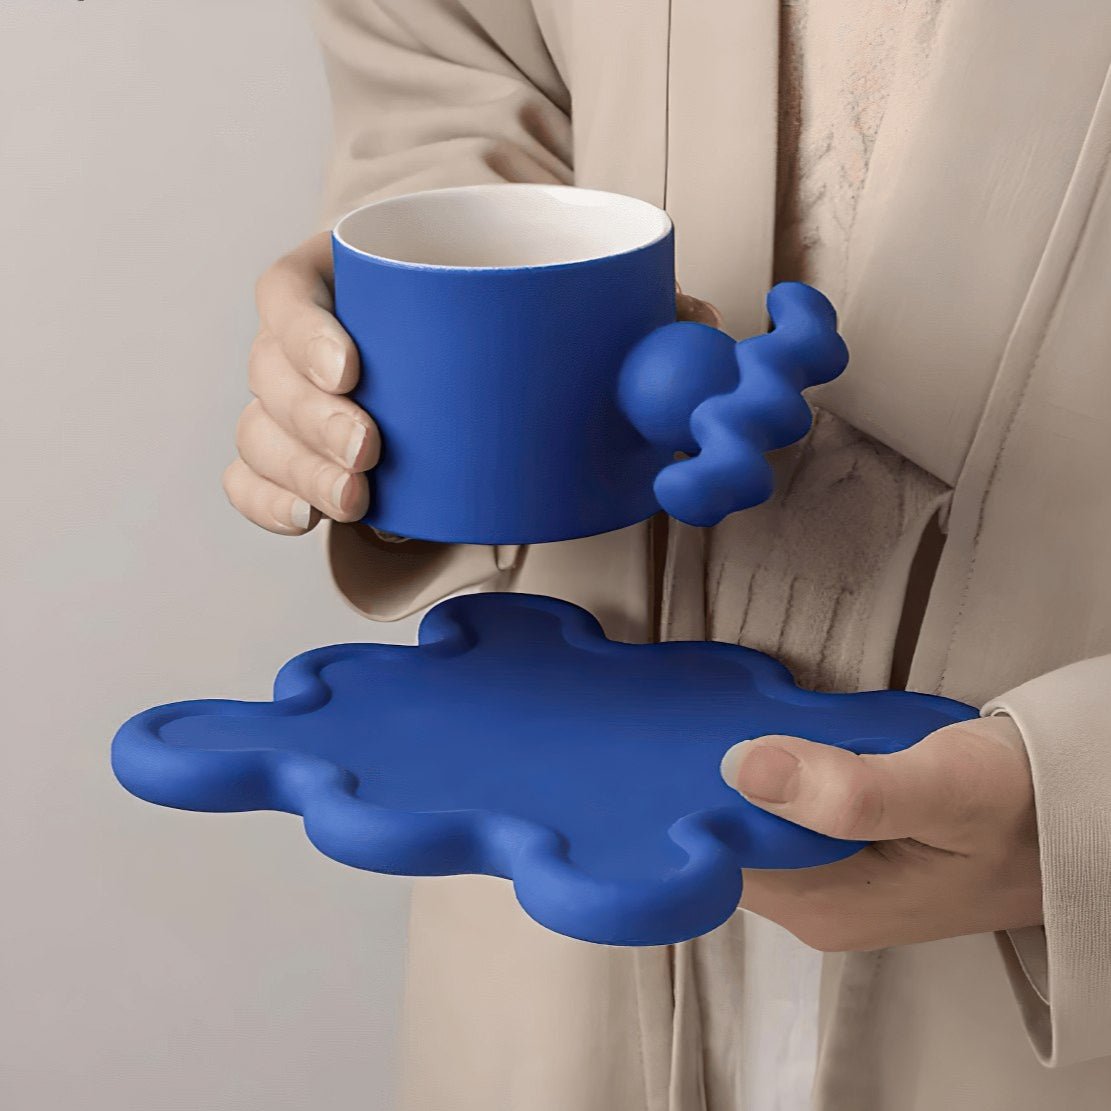 Blue, ceramic, geometrical handle mug with wavy saucer